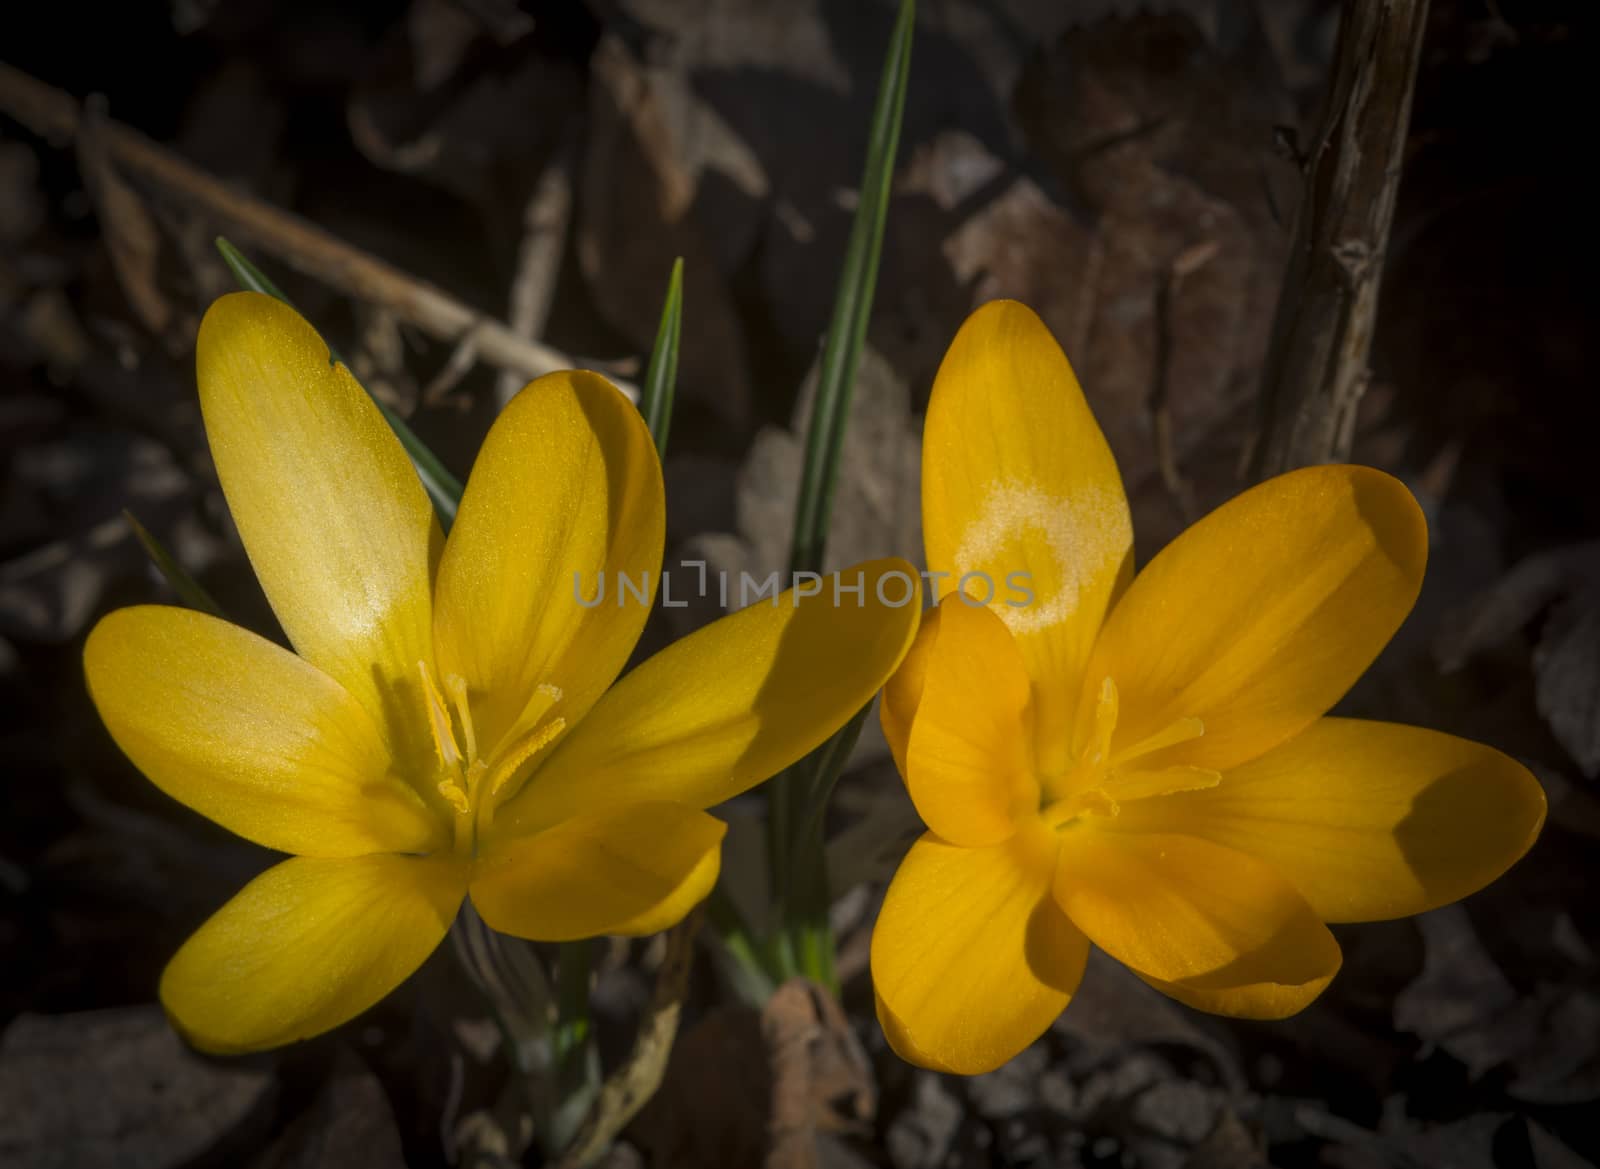 Two Yellow Crocus Flowers by ArtesiaWells